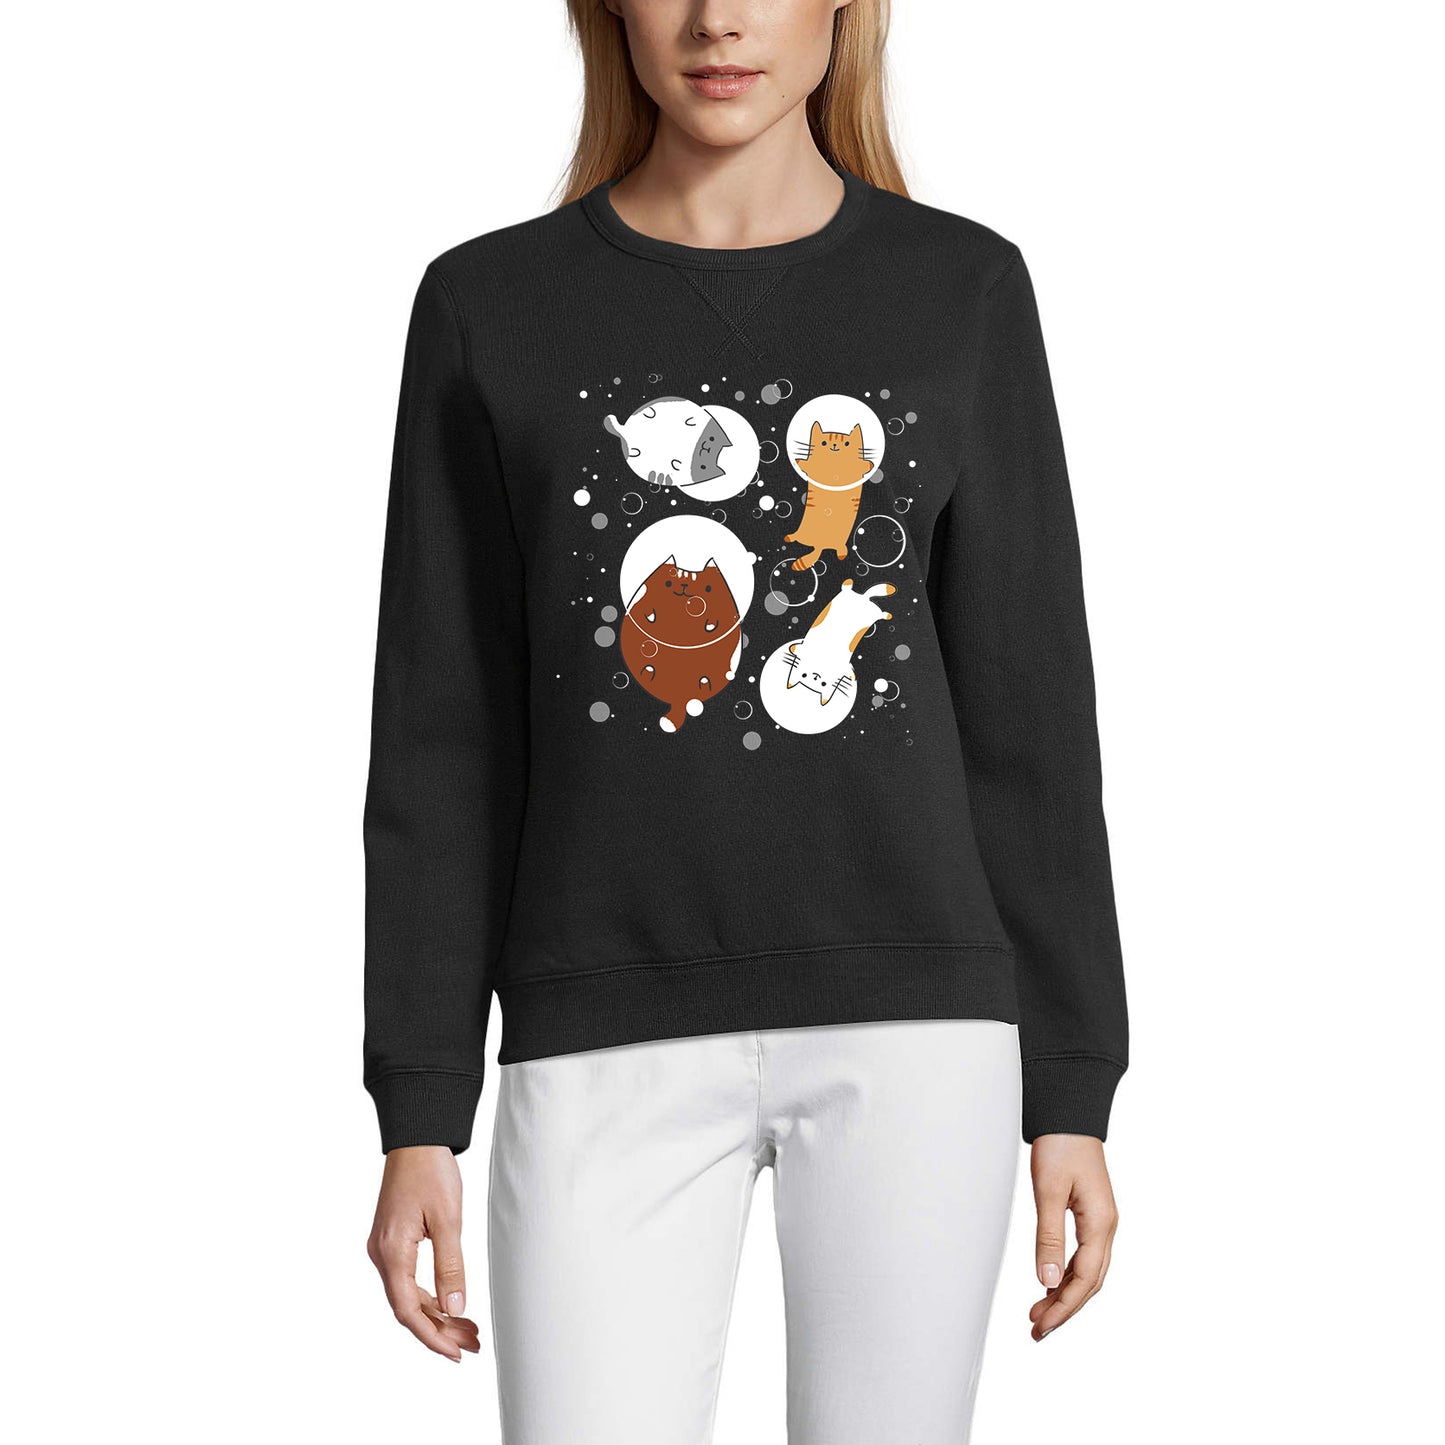 ULTRABASIC Women's Sweatshirt Flower Cat - Kitten Funny Sweater for Ladies